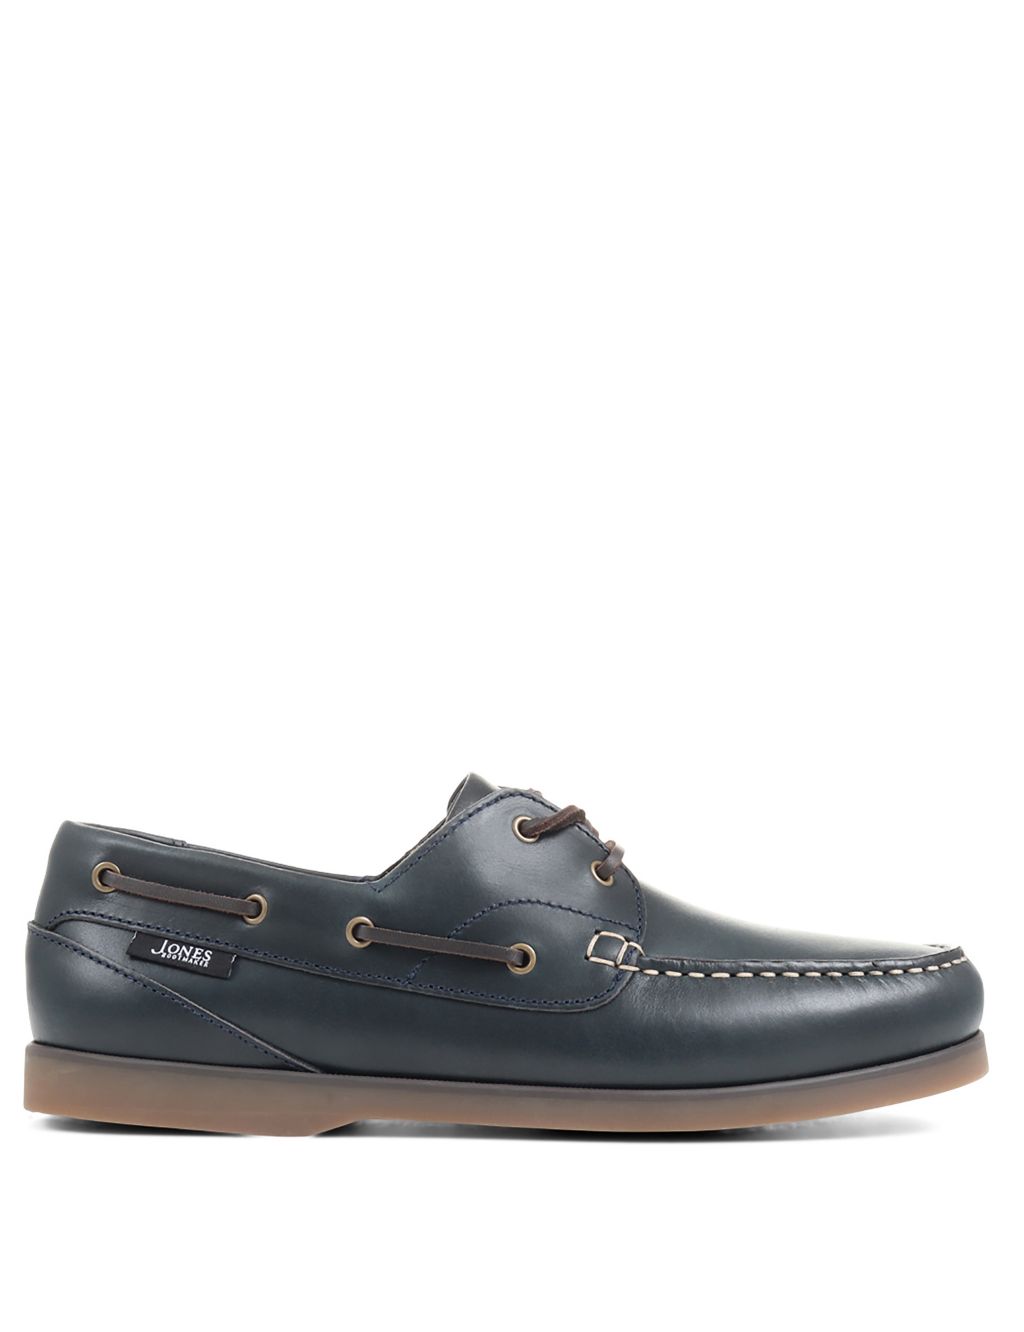 Leather Slip-On Boat Shoes image 2